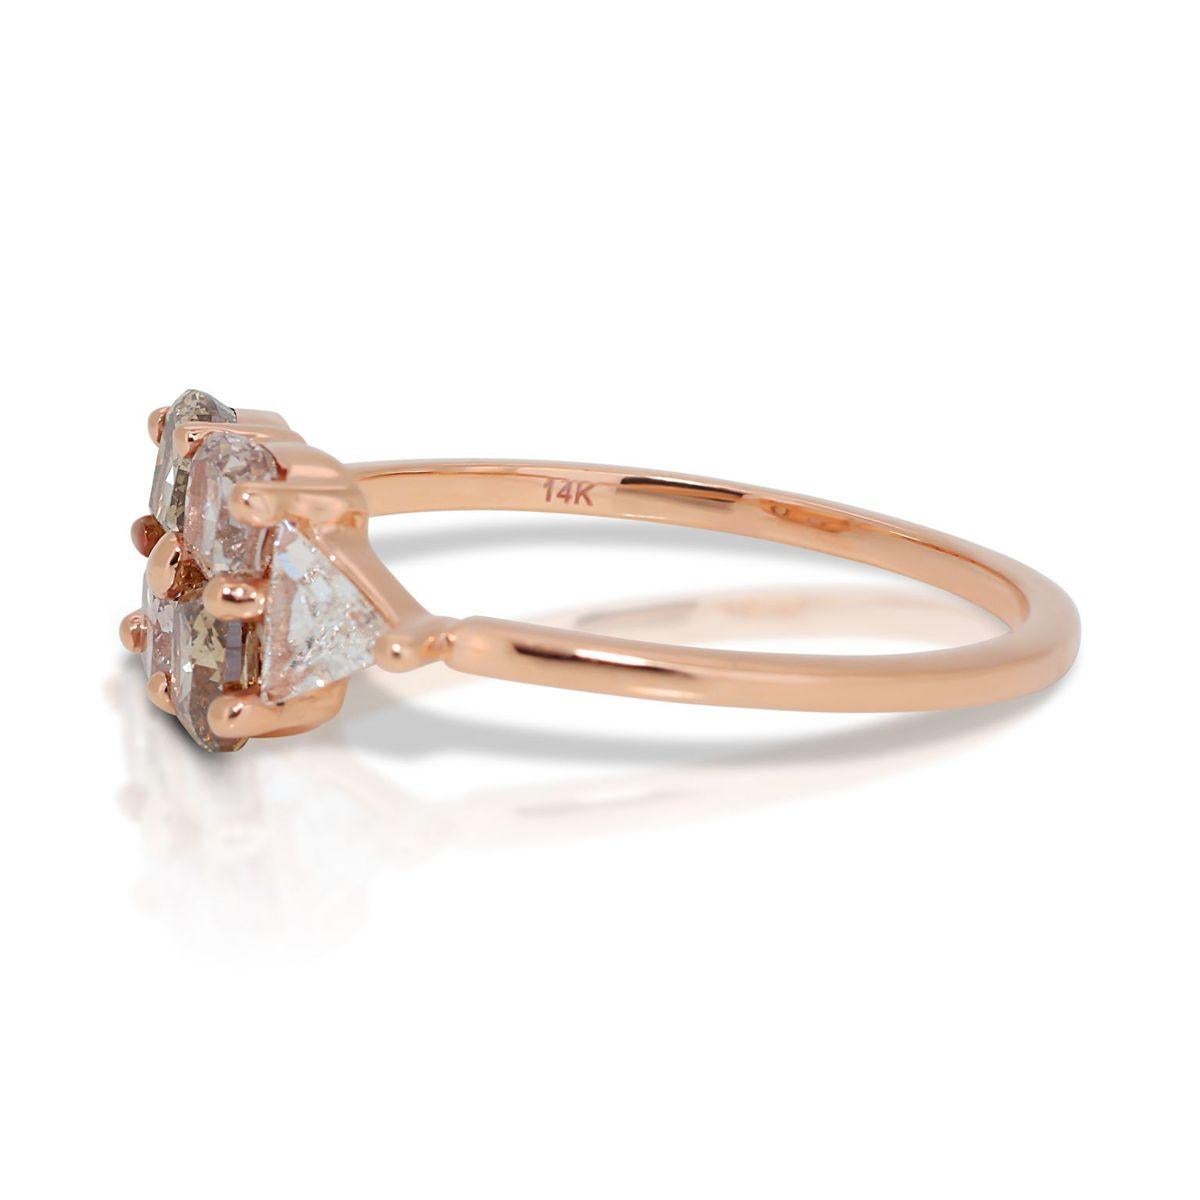 Women's Elegant 14k Rose Gold Multi-Color Ring with 1.16 Ct Natural Diamonds, NGI Cert For Sale